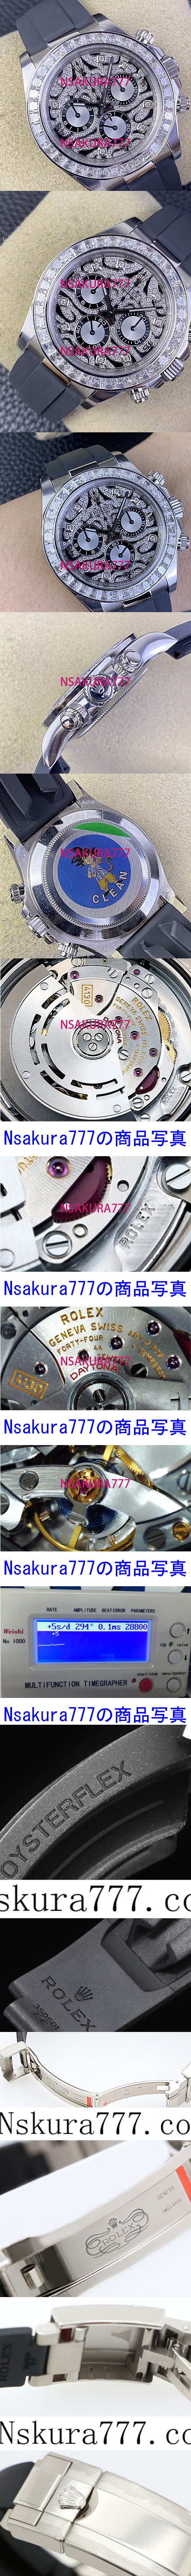 Rolex Daytona Ref.116588 TBR,Cal.4130自動巻きムーブメント搭載( Clean工場最高製品) - ウインドウを閉じる